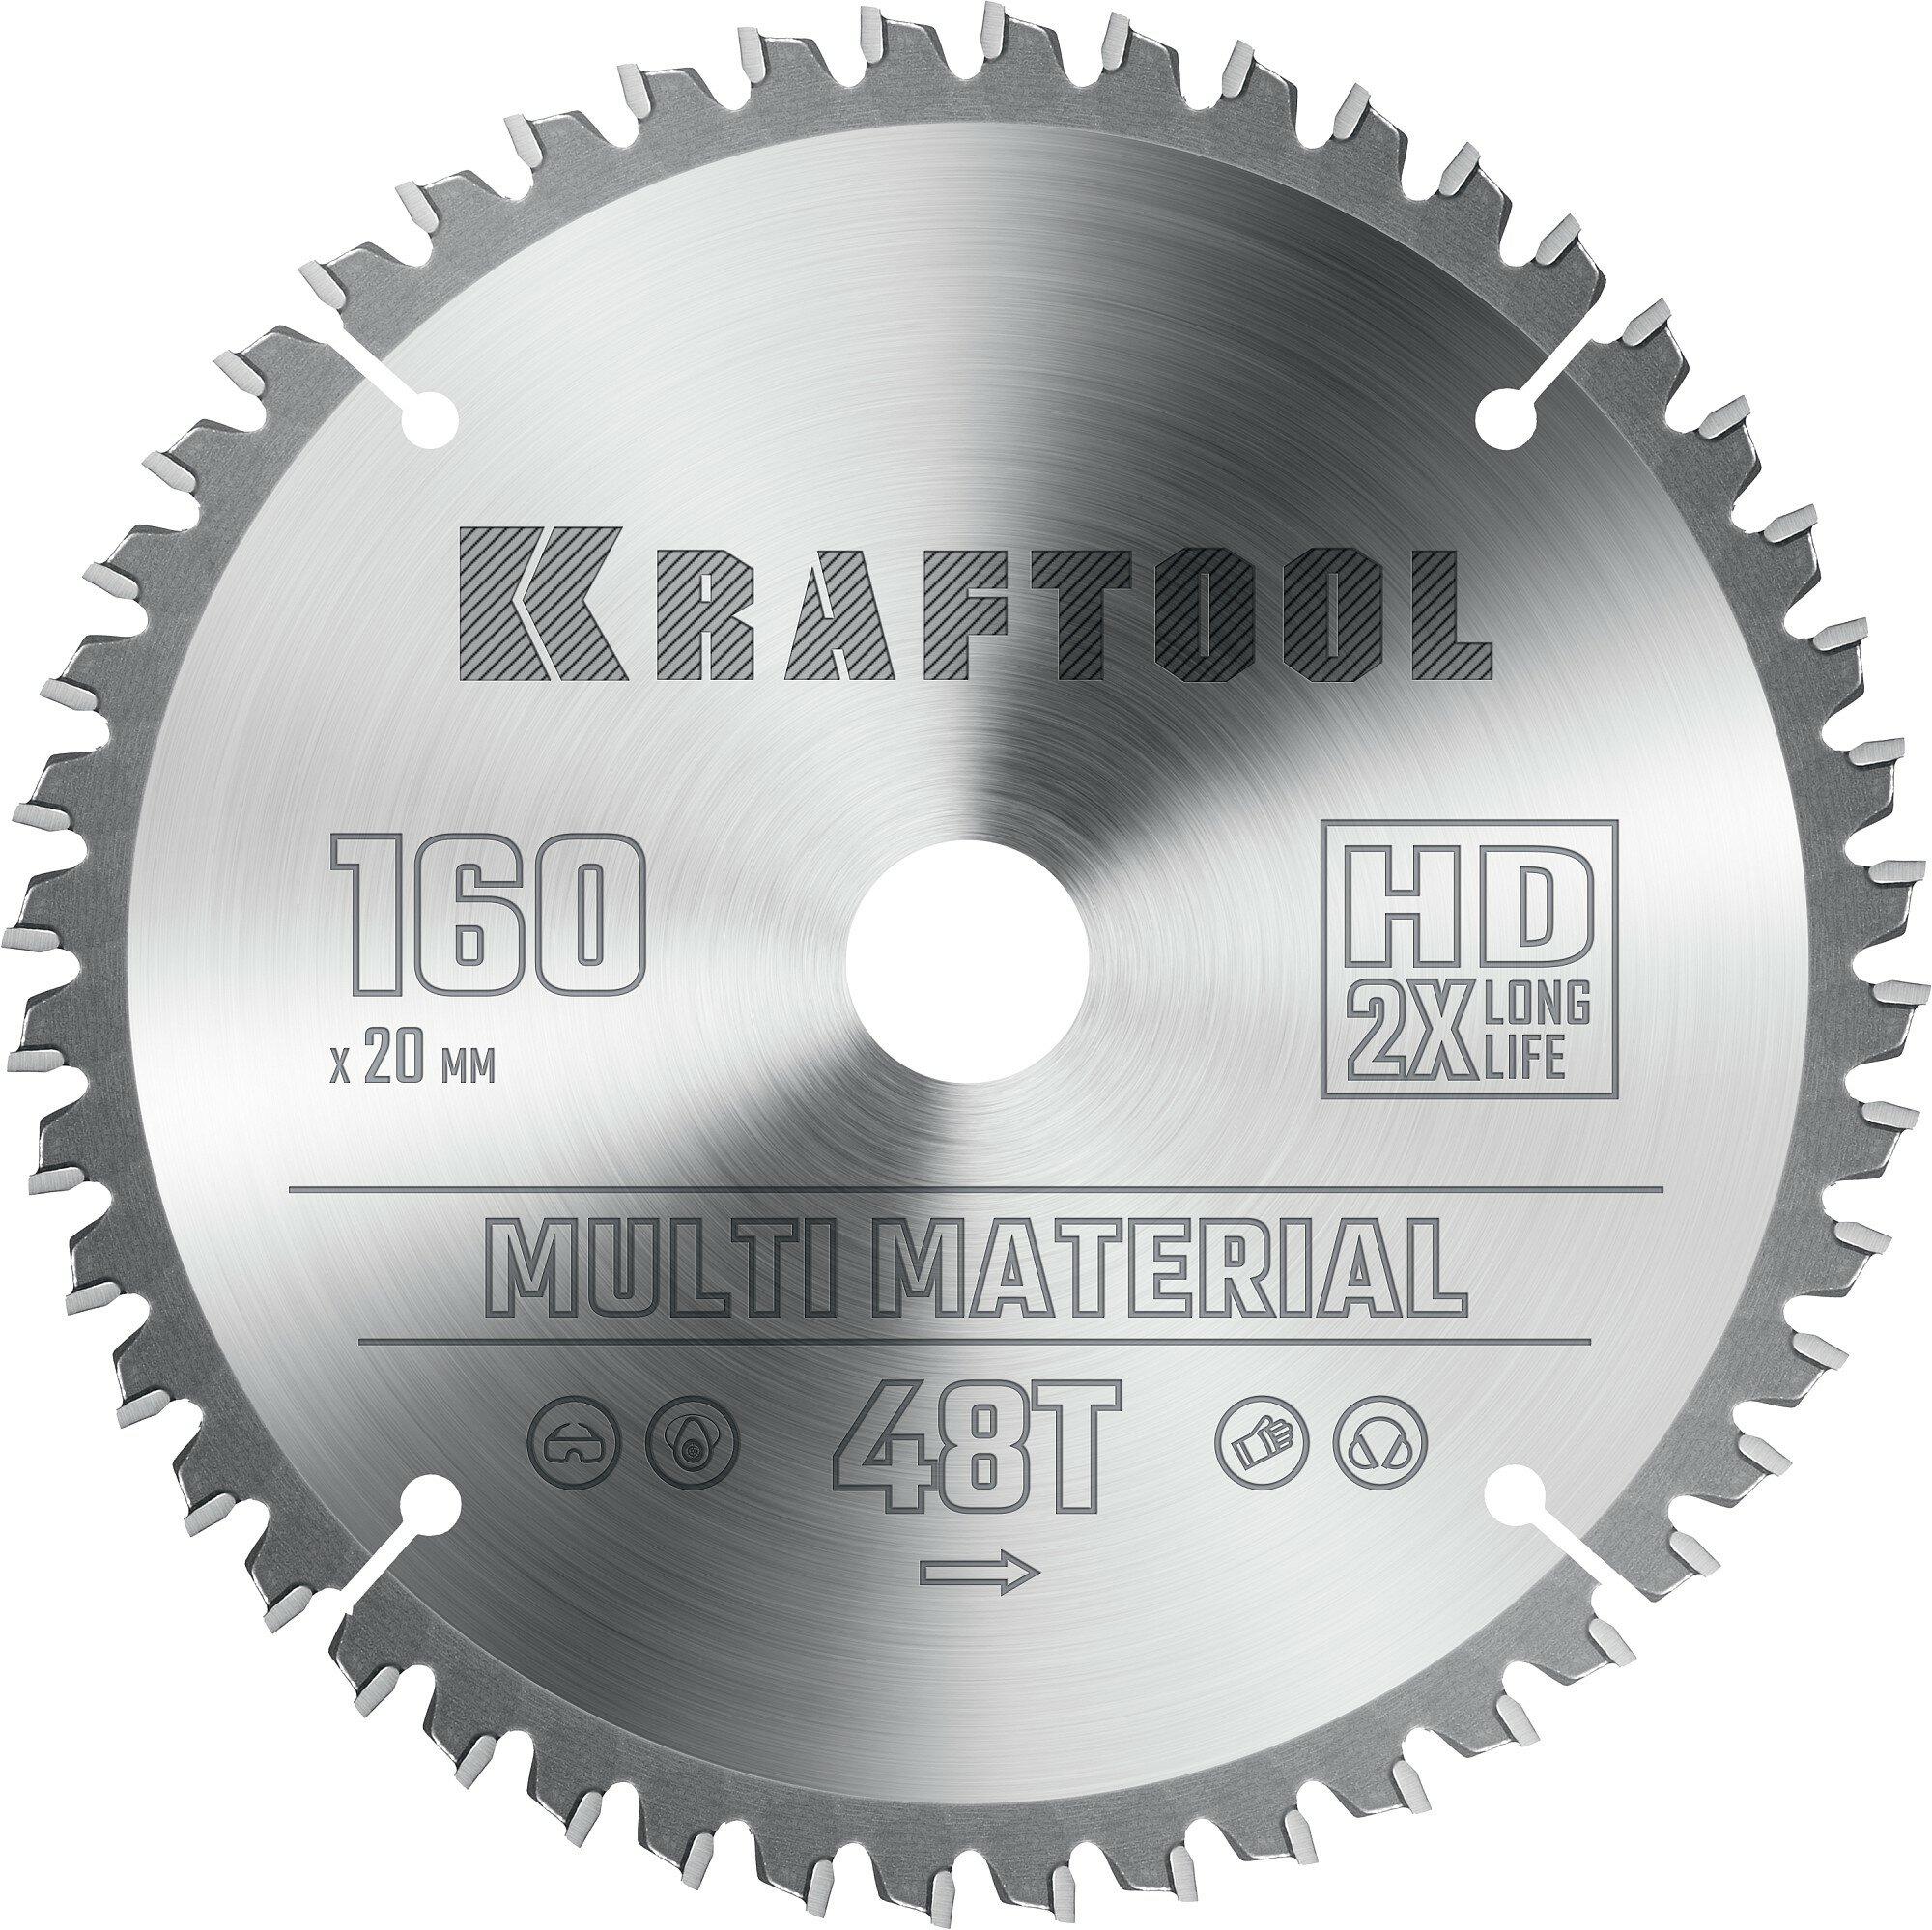 KRAFTOOL Multi Material 160х20мм 48Т диск пильный по алюминию (36953-160-20)